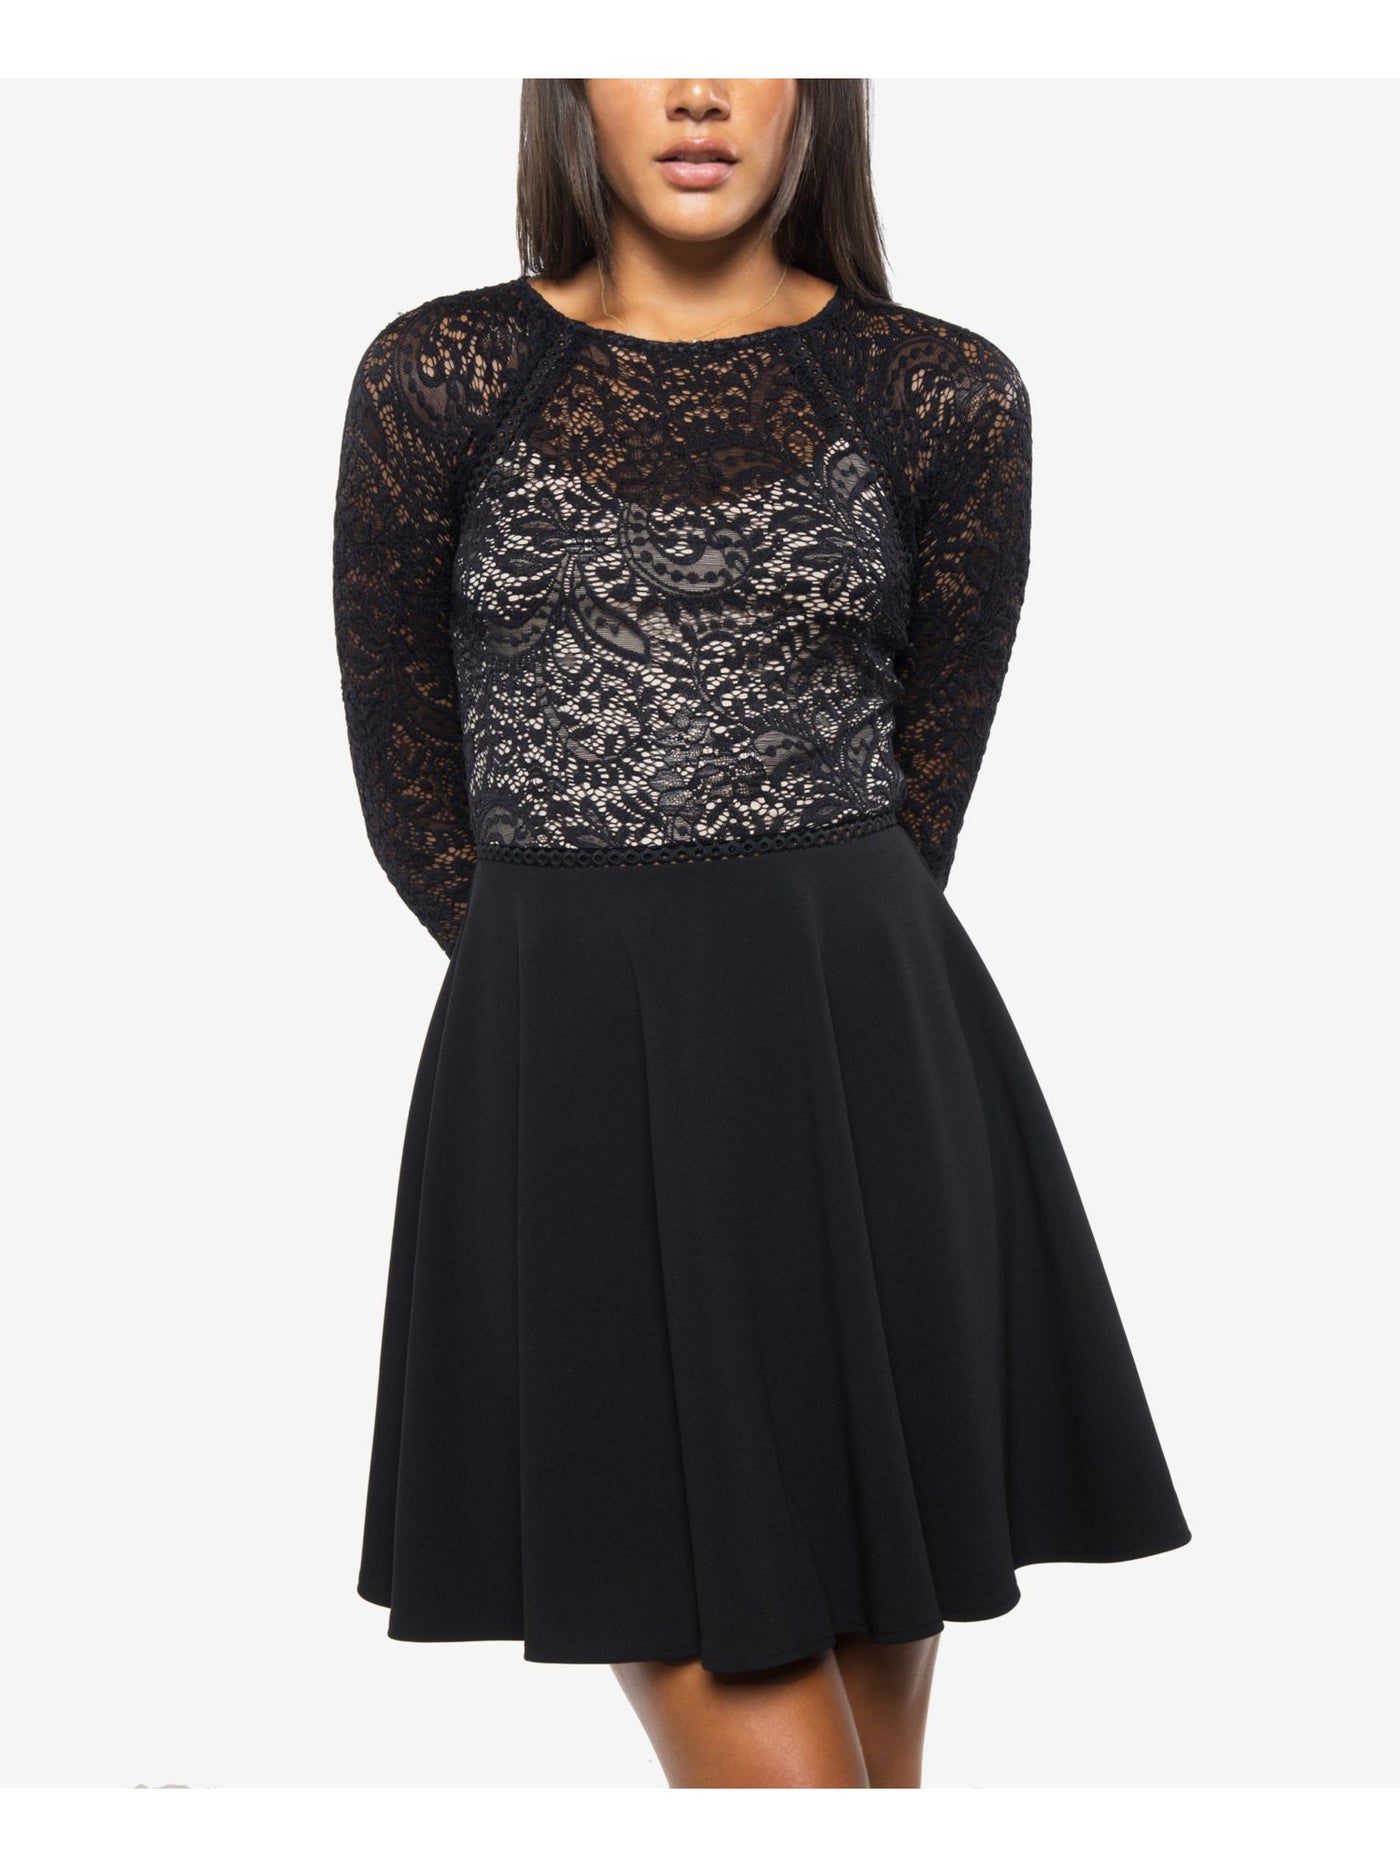 B DARLIN Womens Black Lace Zippered 3/4 Sleeve Jewel Neck Short Party Fit + Flare Dress Juniors 0